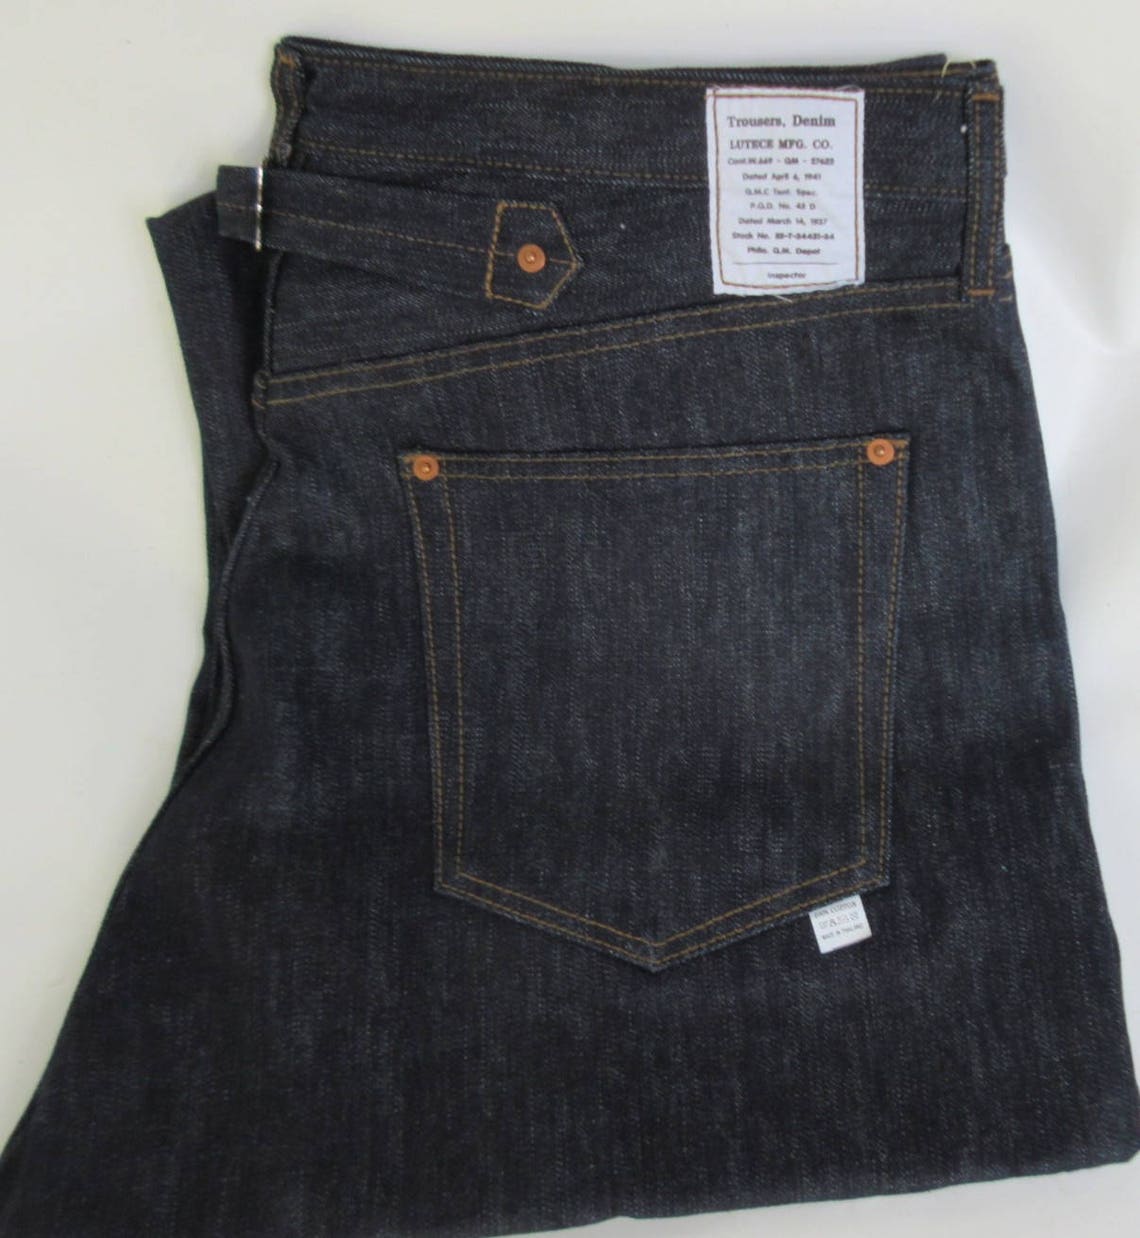 Lutece Mfg Co Quartermaster Denim Jeans 30-40s Style | Etsy